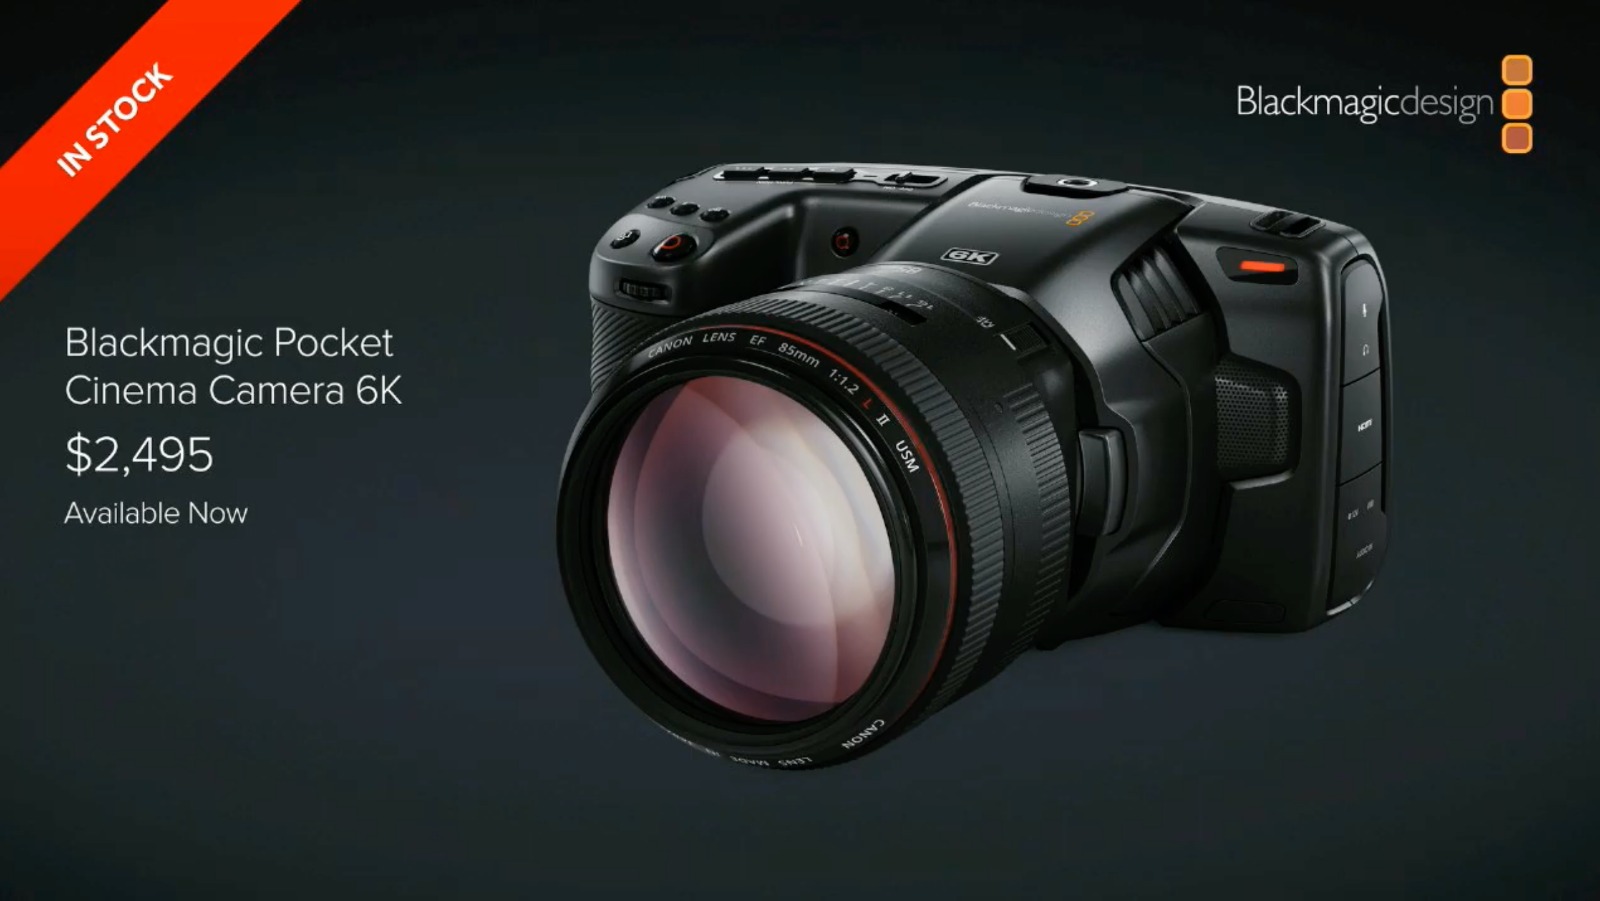 Blackmagic Pocket Cinema Camera 6K Announced - Super 35 Sensor and